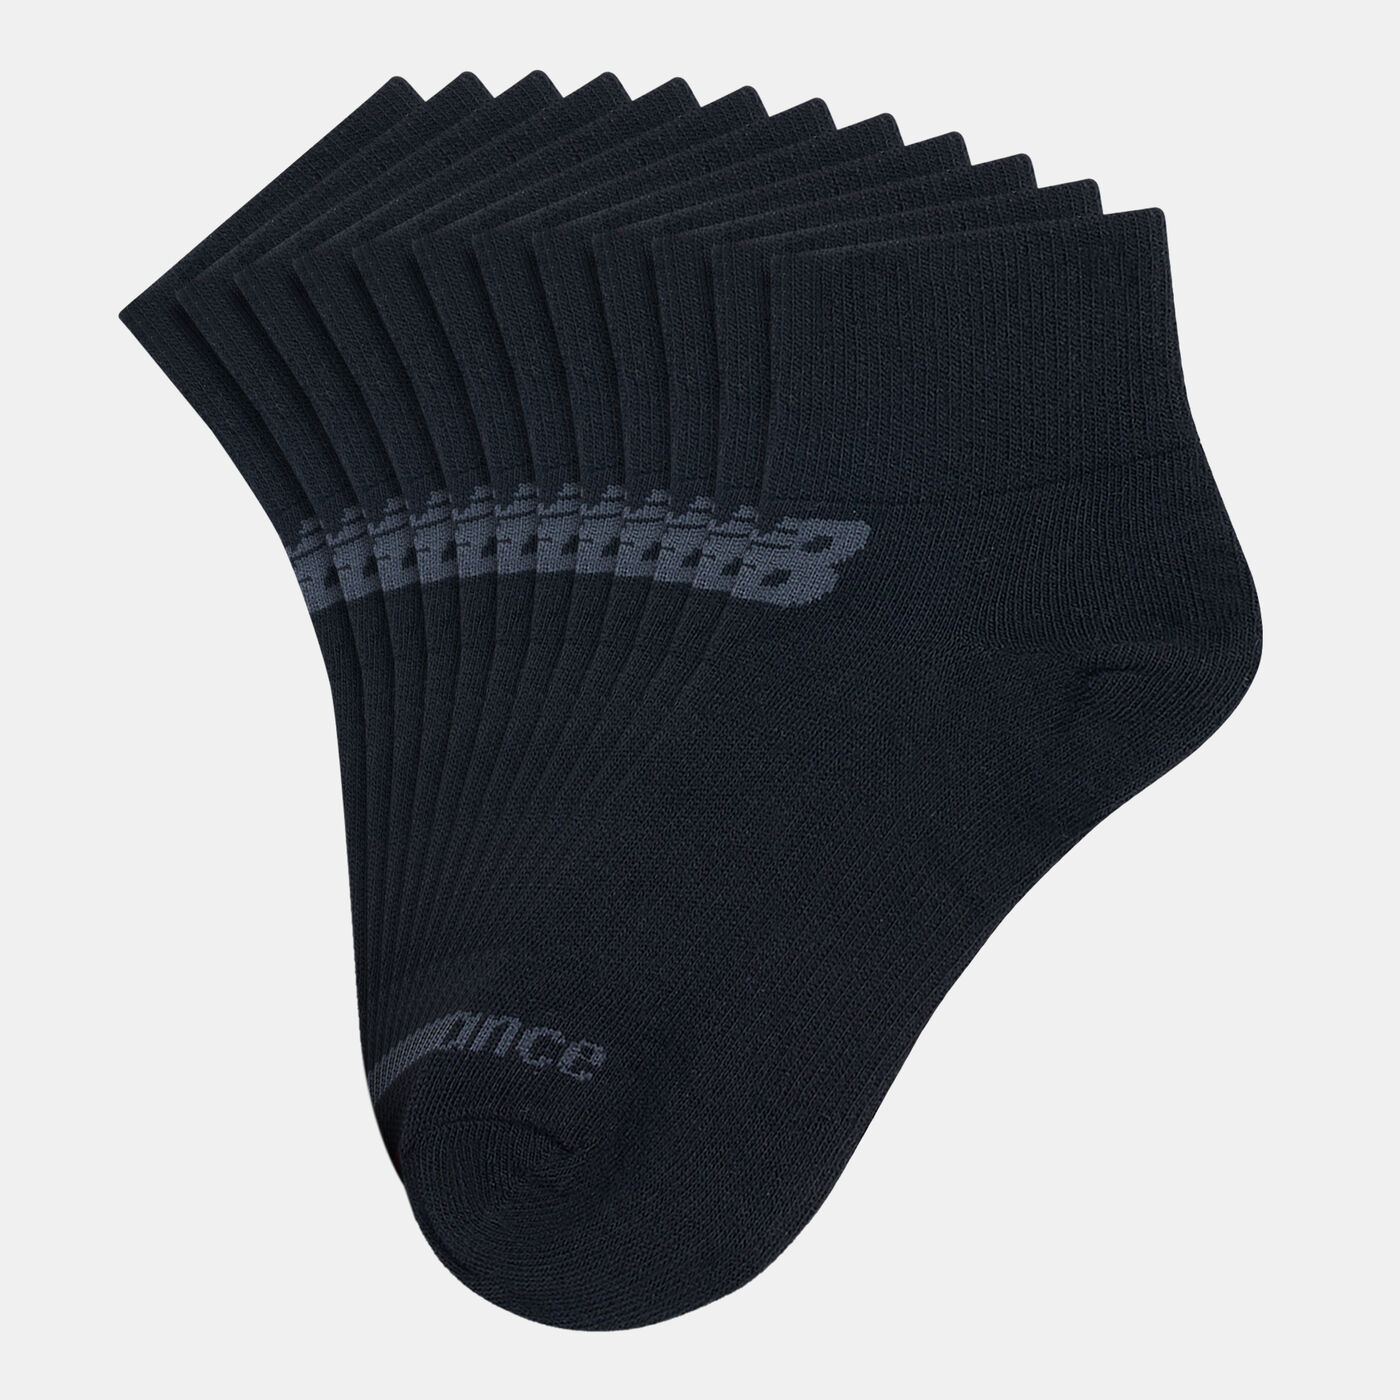 Performance Flat Knit Ankle Socks (6 Pack)